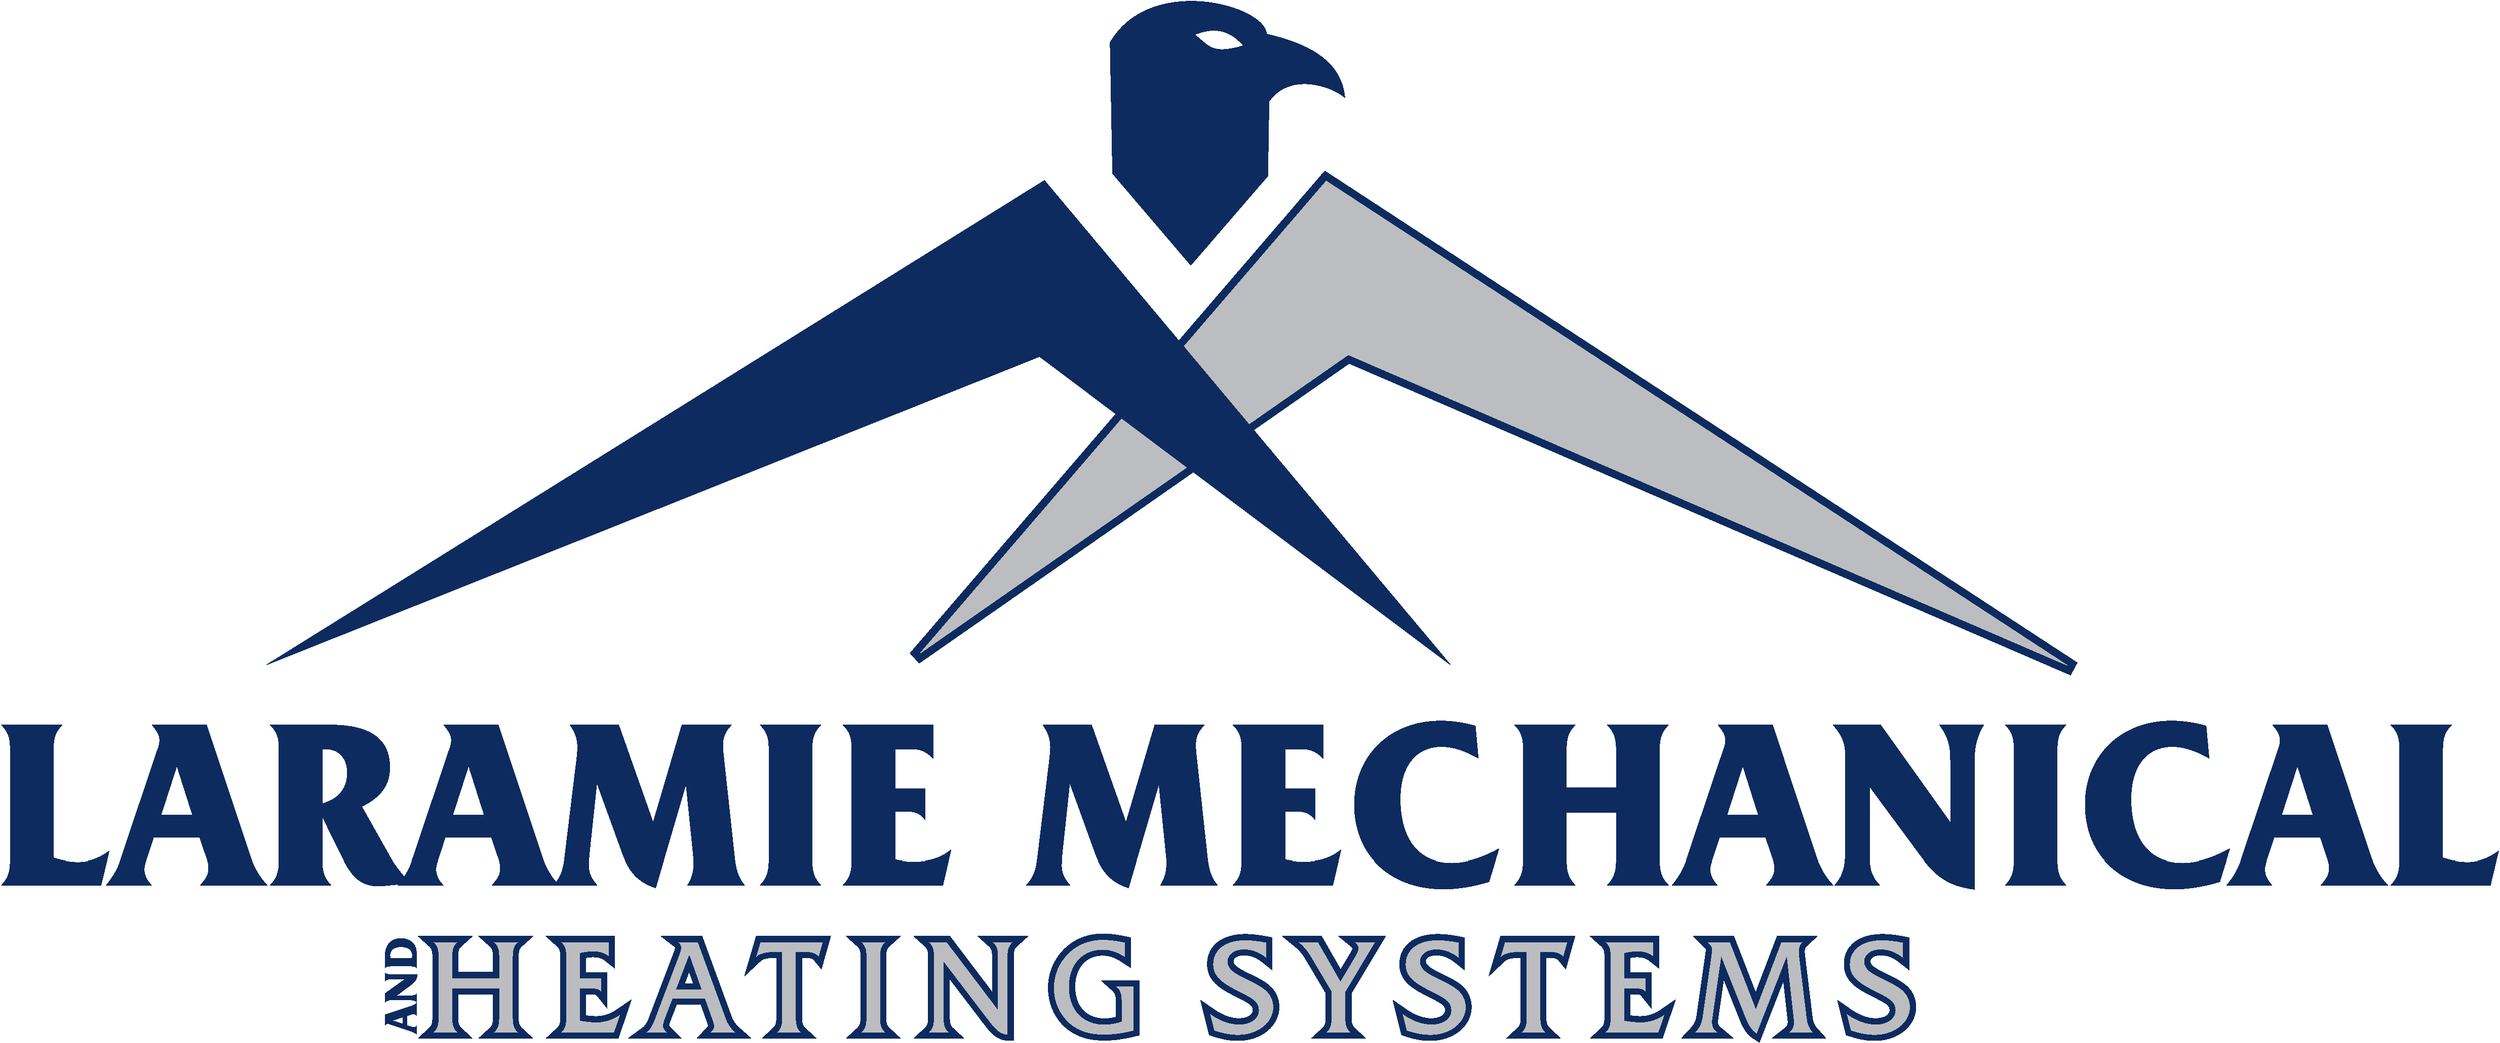 Laramie Mechanical Logo 4.16 (1).png